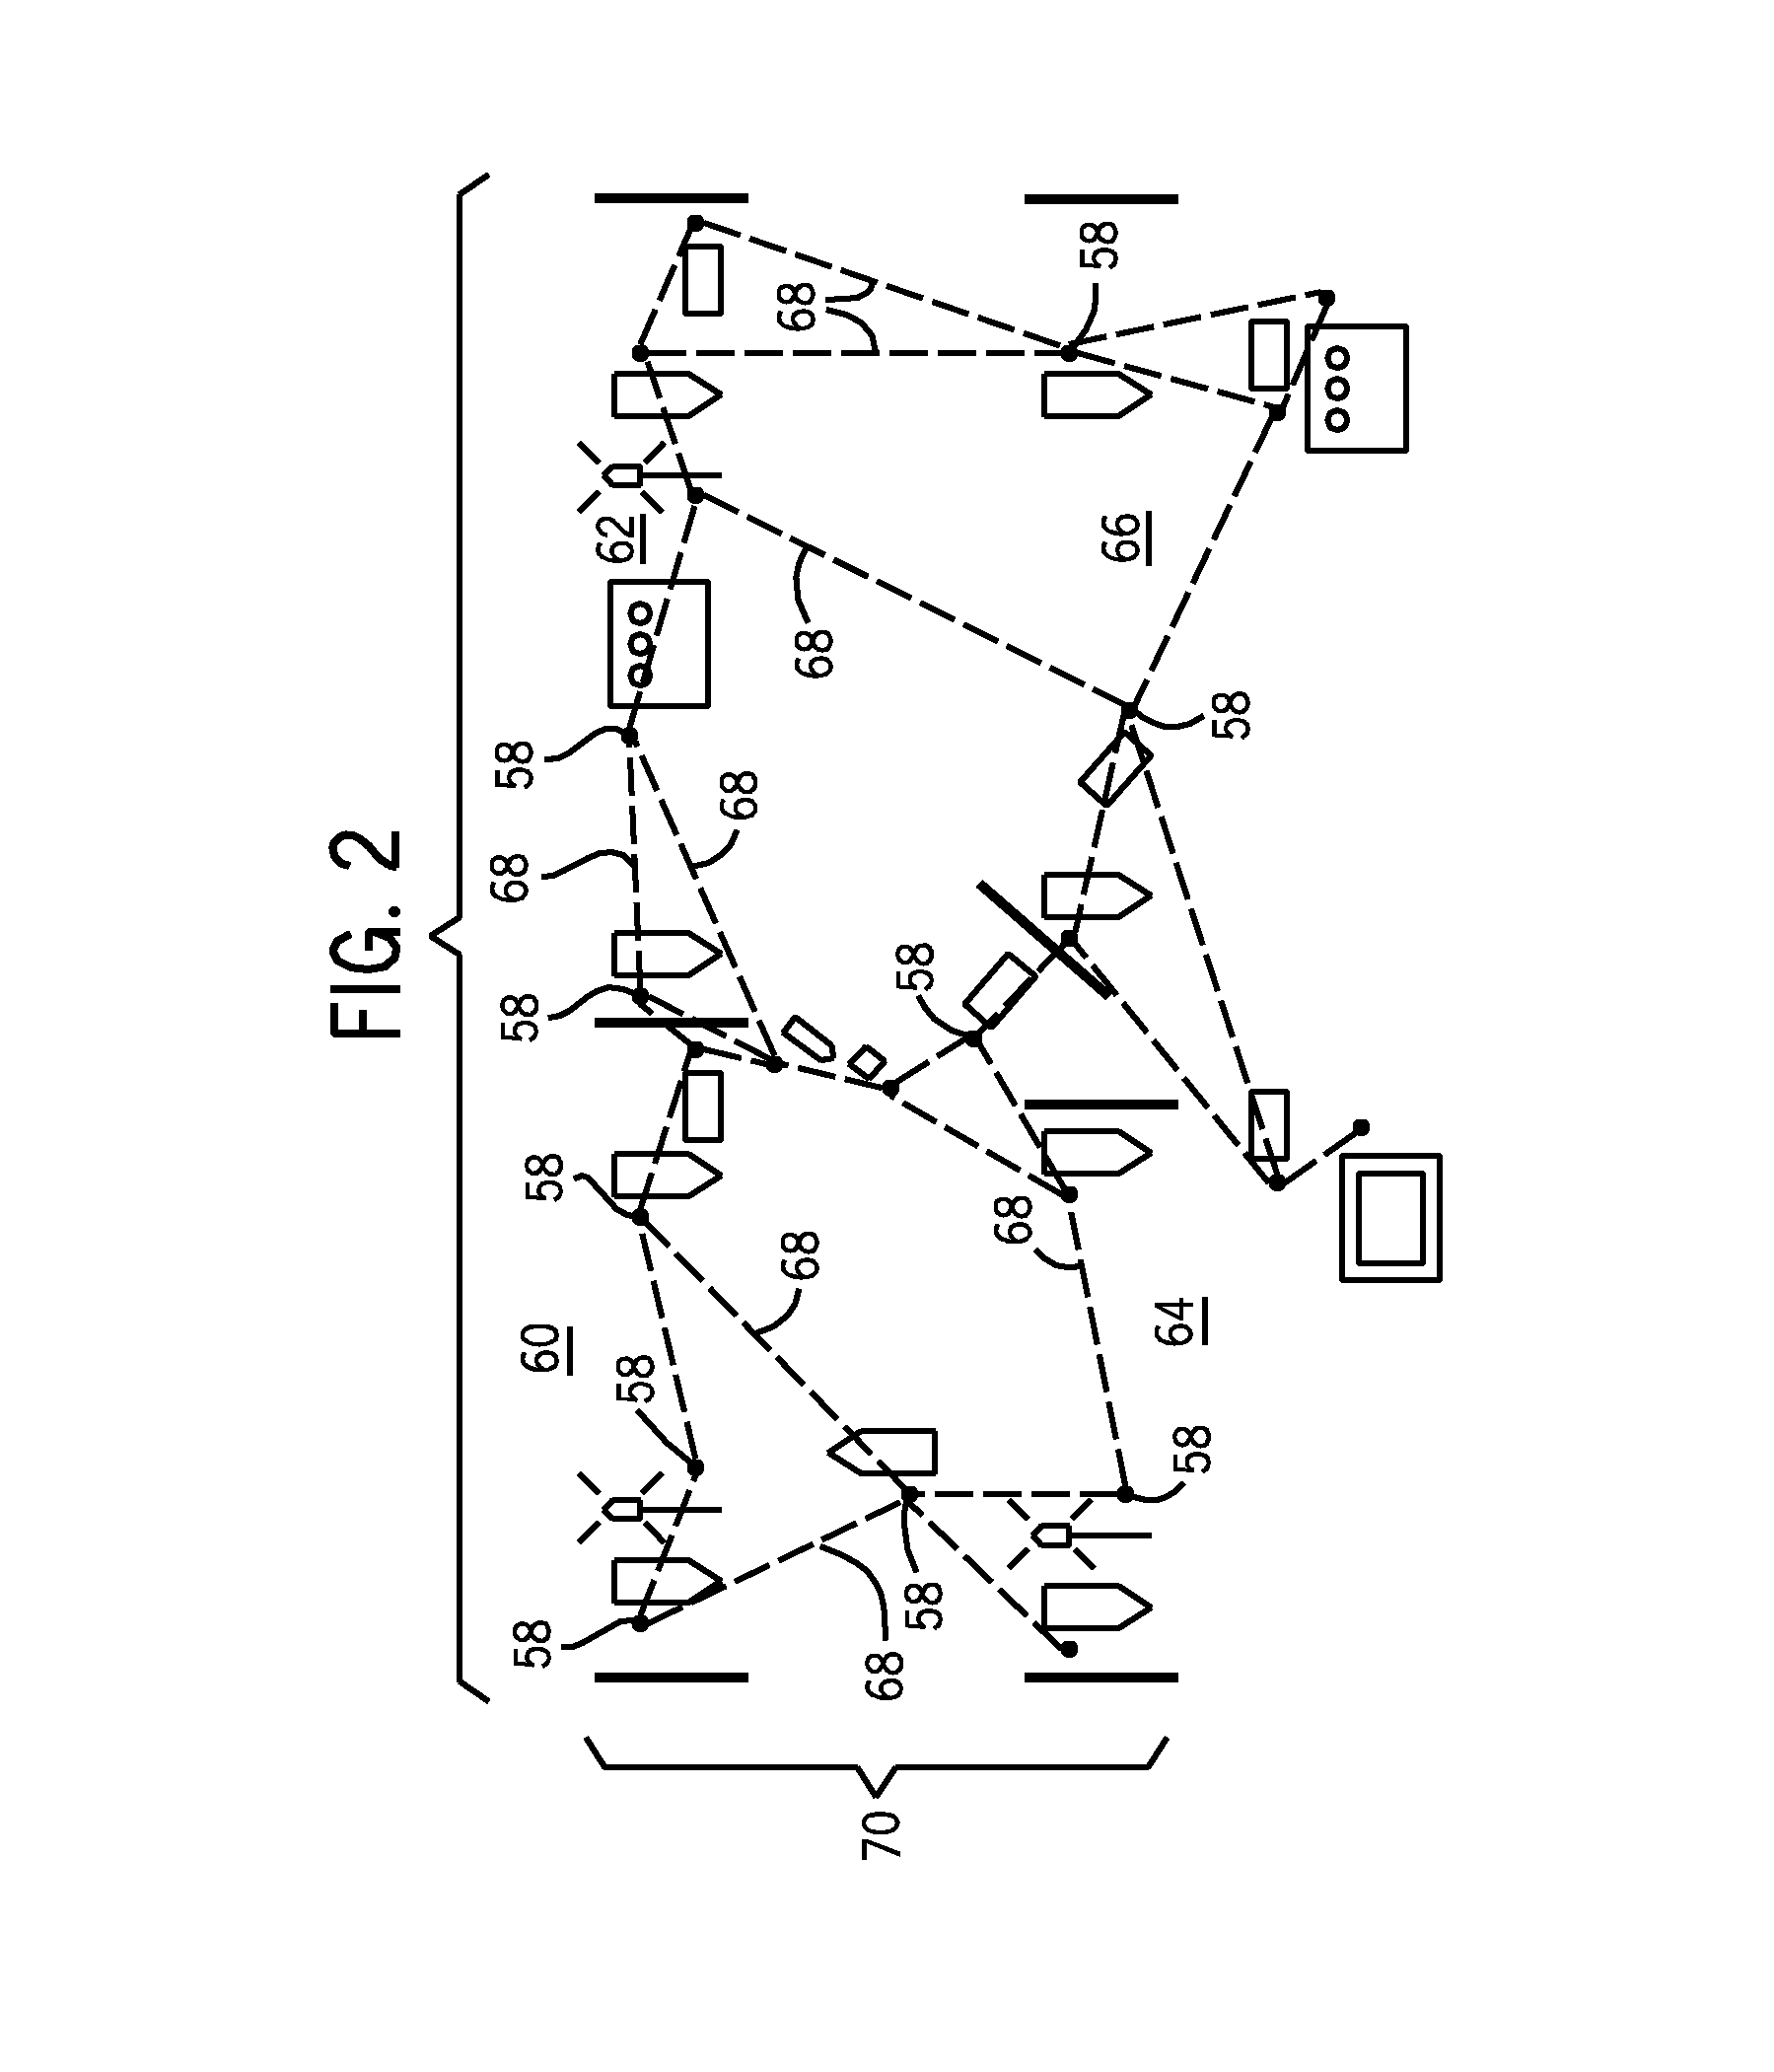 Modular wireless conveyor interconnection method and system